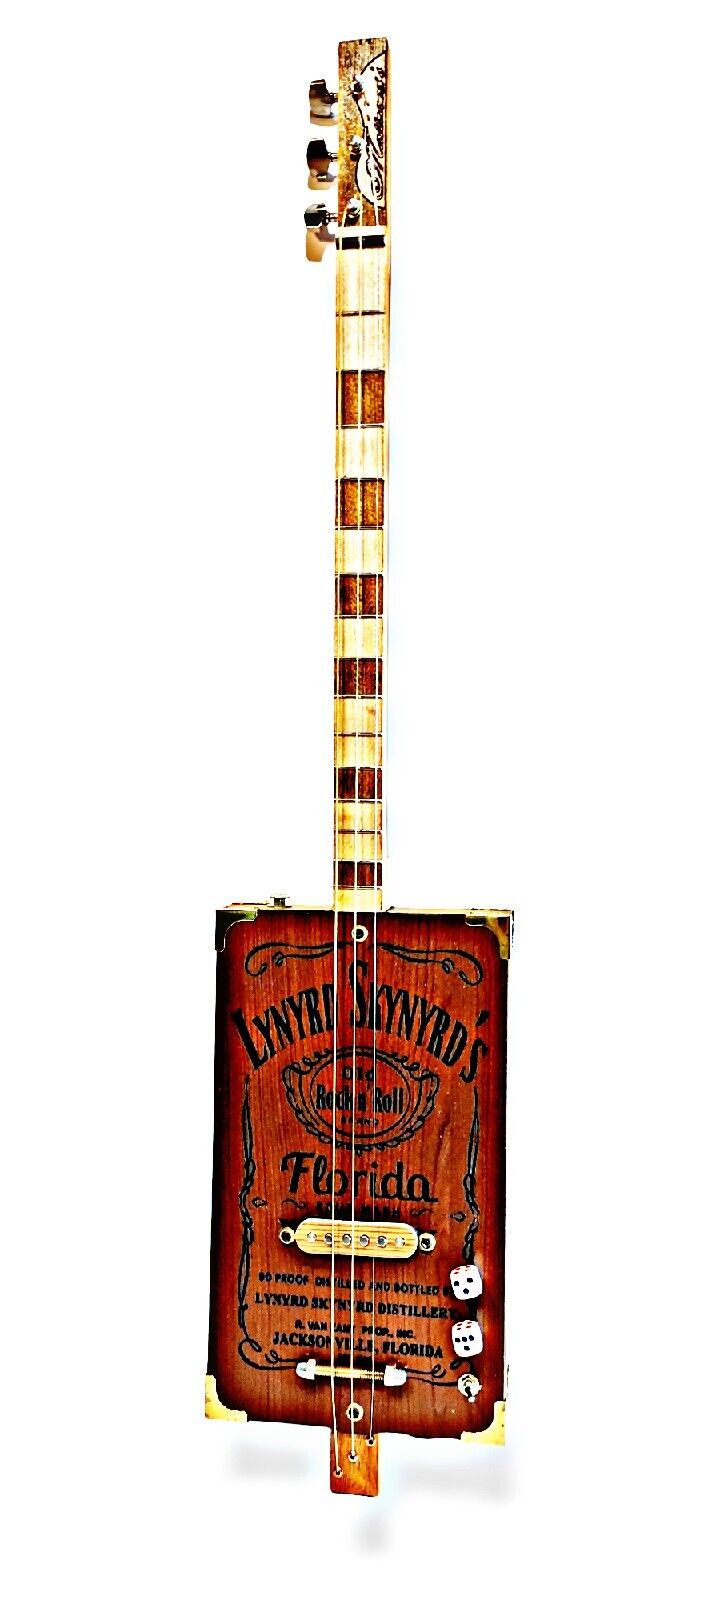 Lynyrd Skinyrd's Tribute 3tpv special Cigar Box Guitar Matteacci's